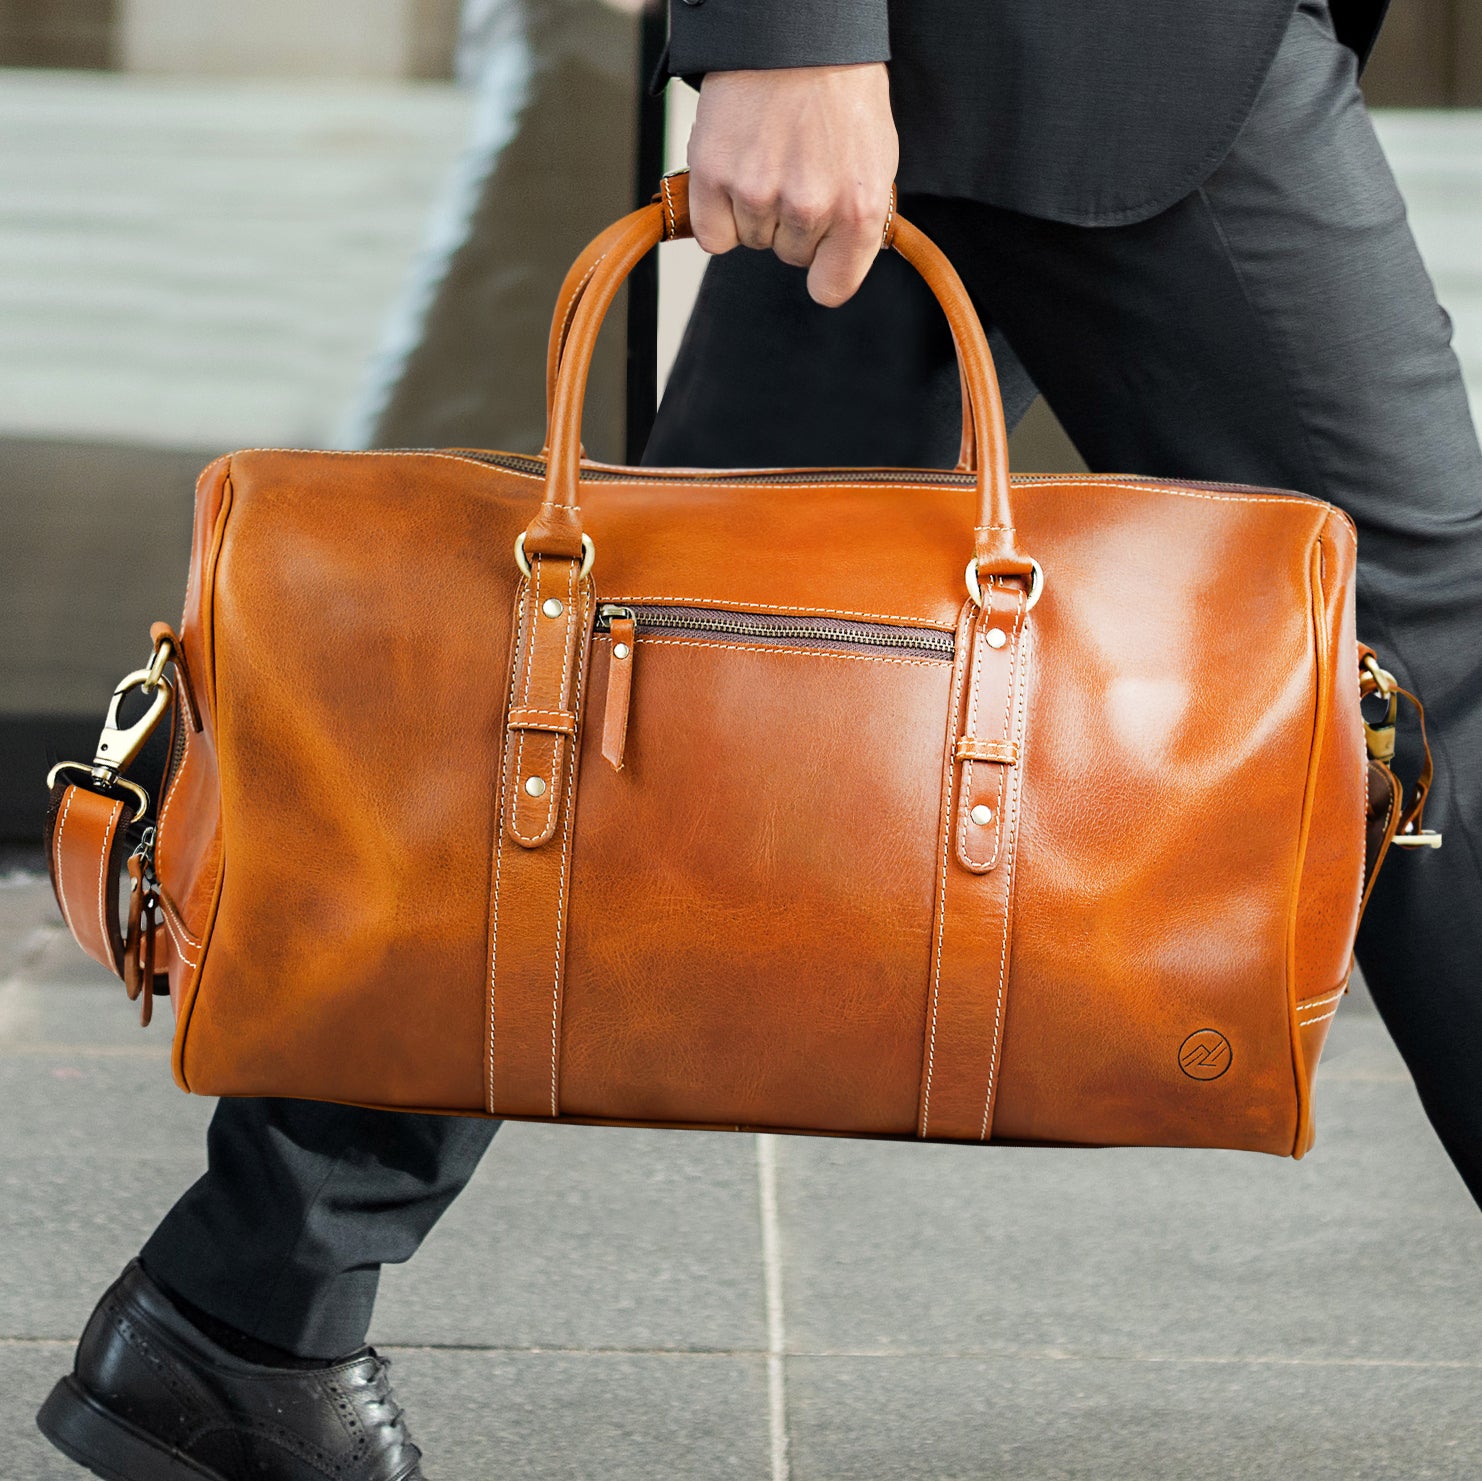 Buffalo Leather Duffle Bag Weekend Travel Aircabin Carryon Luggage